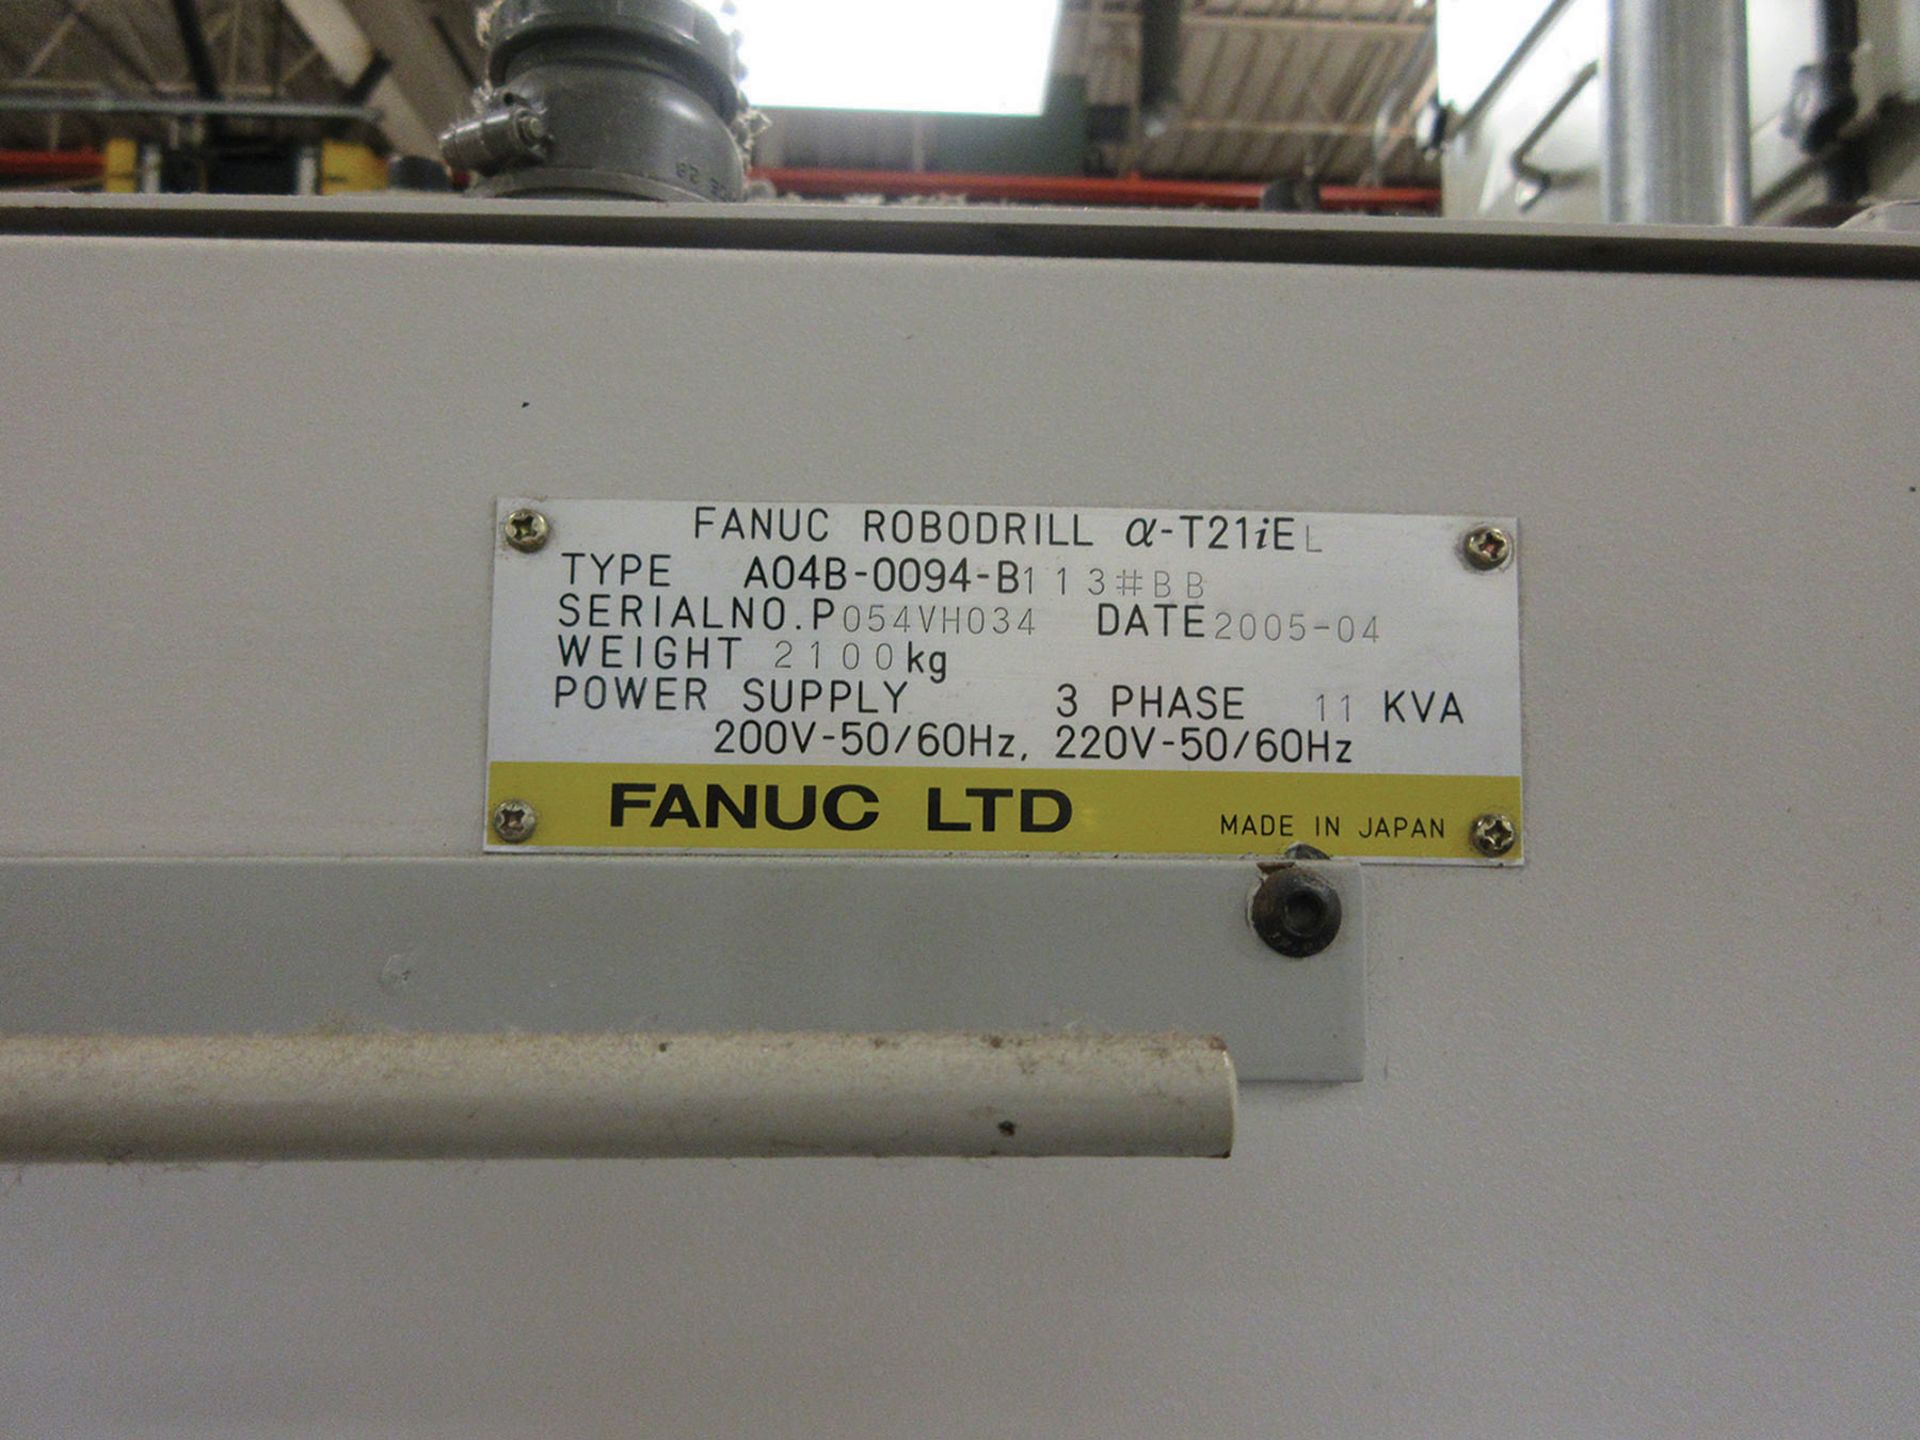 2005 FANUC ROBODRILL 3-AXIS CNC DRILLING CENTER; MODEL A-T21IEL, 18'' X 39'' TABLE, 10,000 RPM - Image 3 of 5